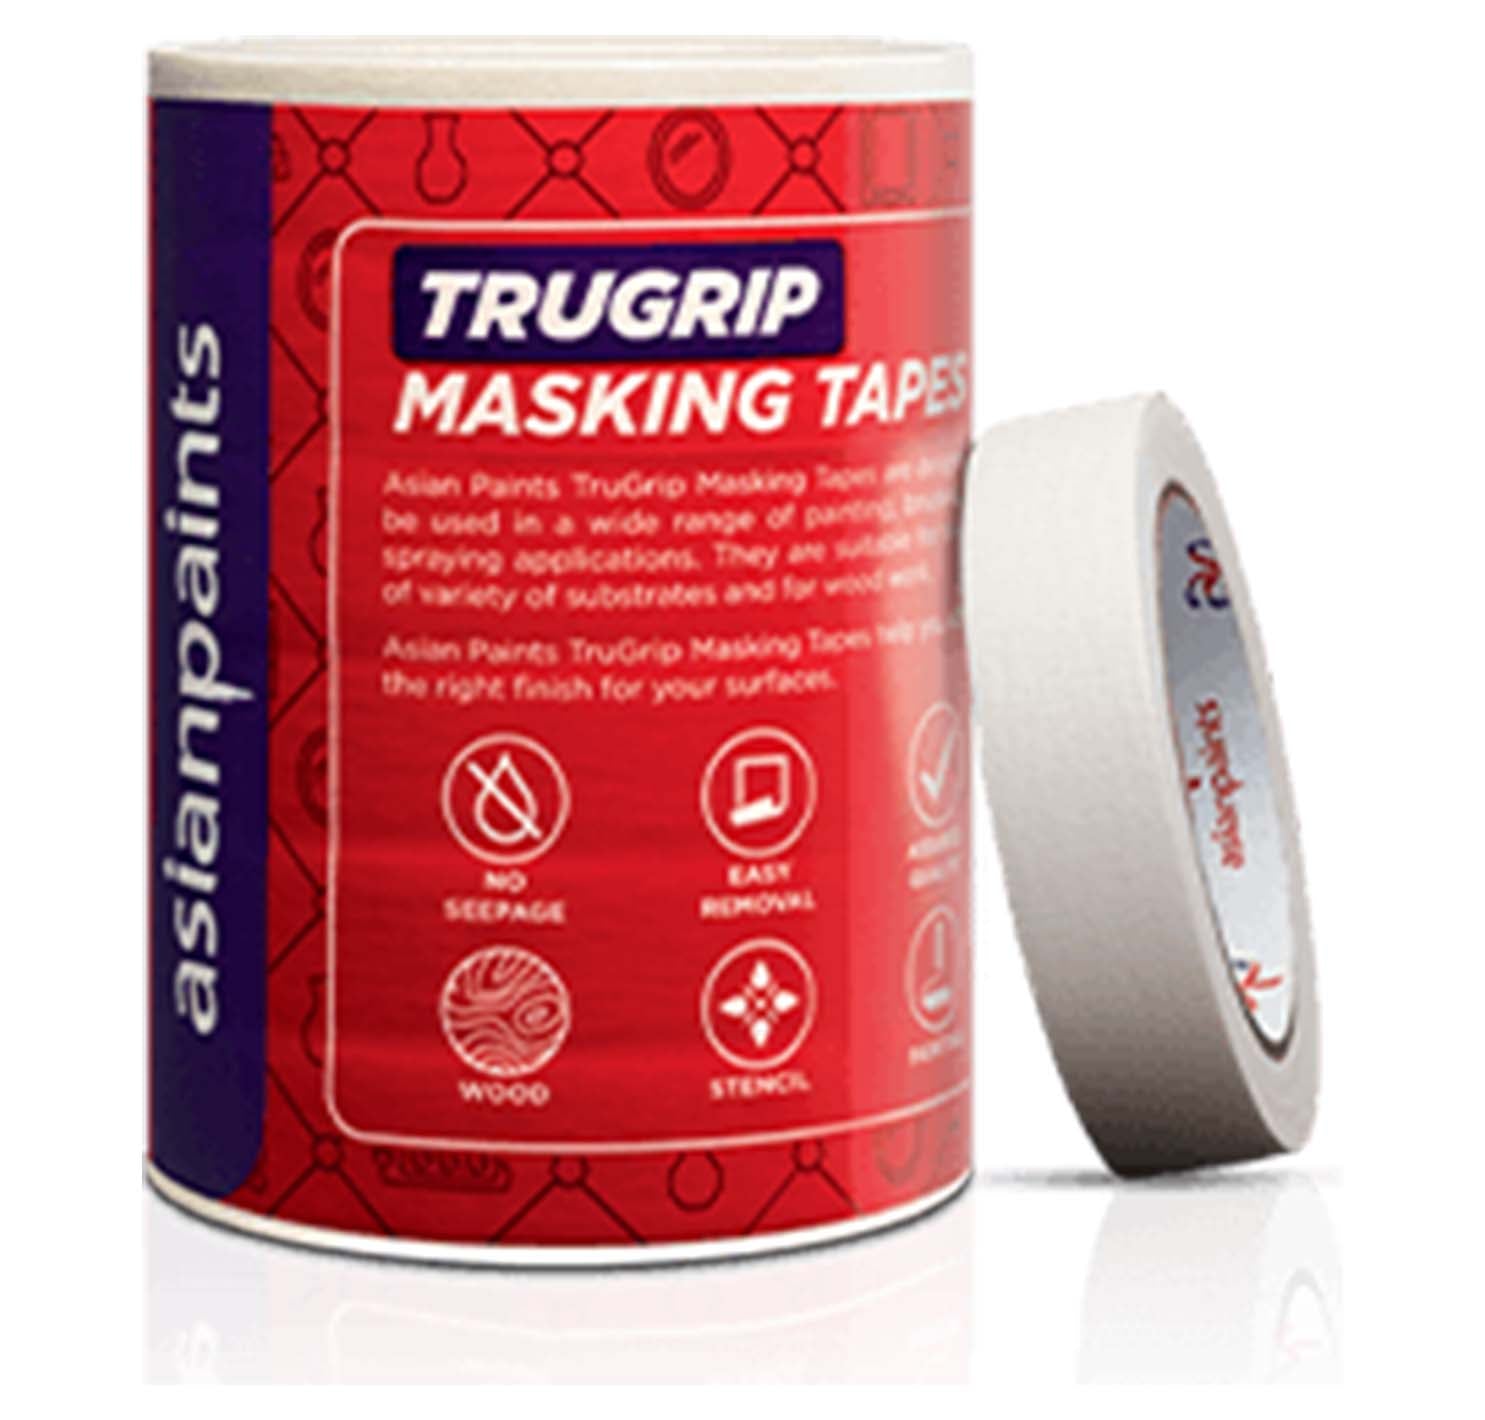 Asian Paints Trugrip Masking Tape 1.8 cm - Pack of 8